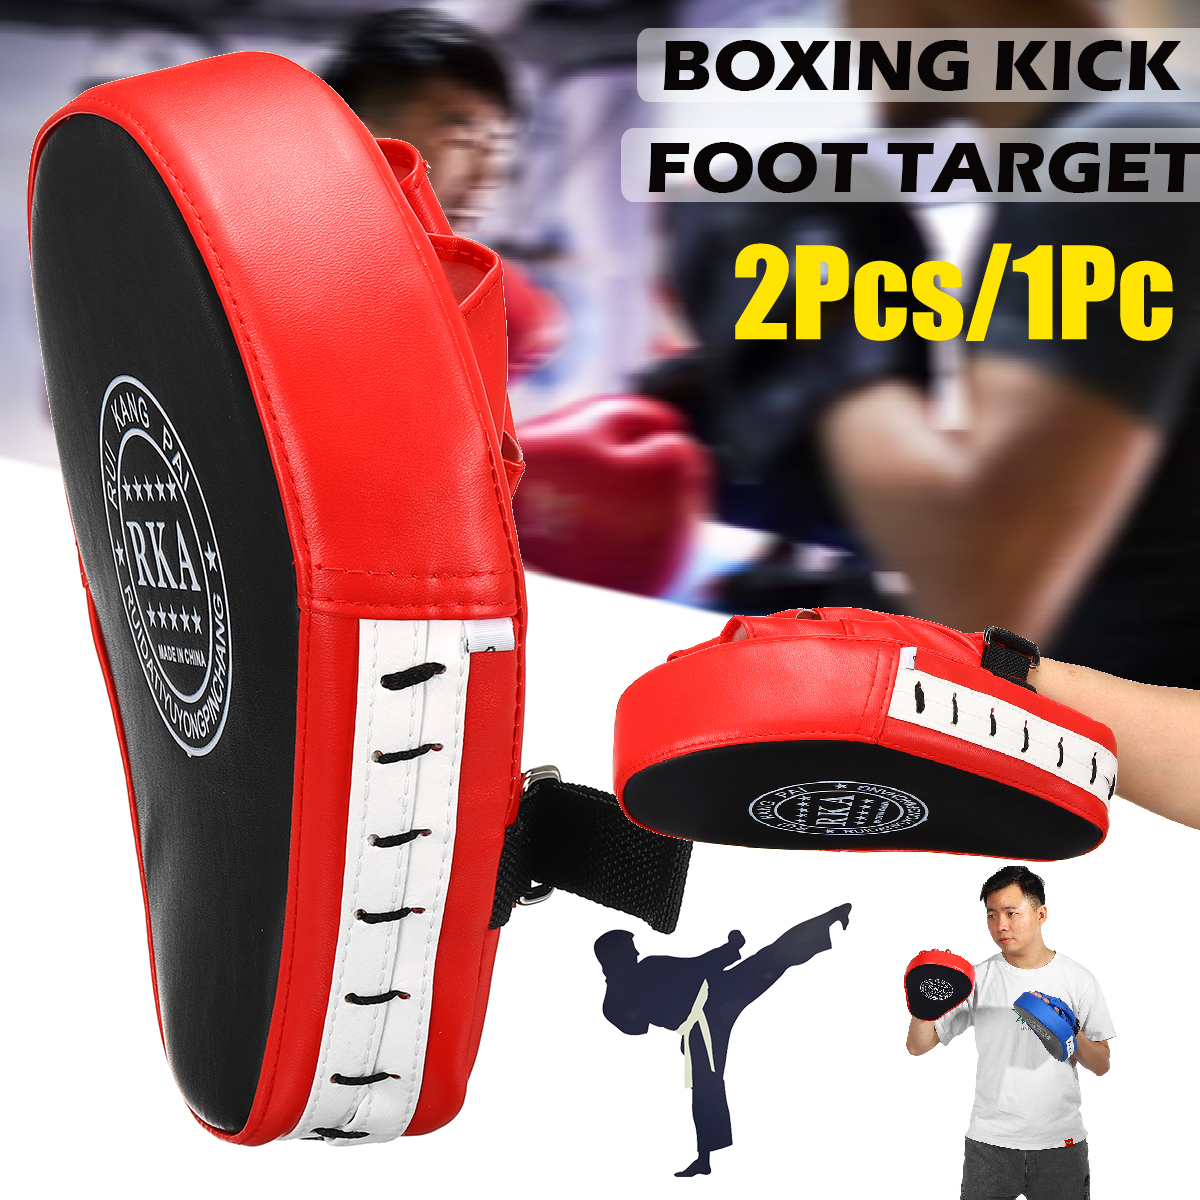 Foot Target Training Sport Fitness Boxing Equipment PU Leather Foam Pads 